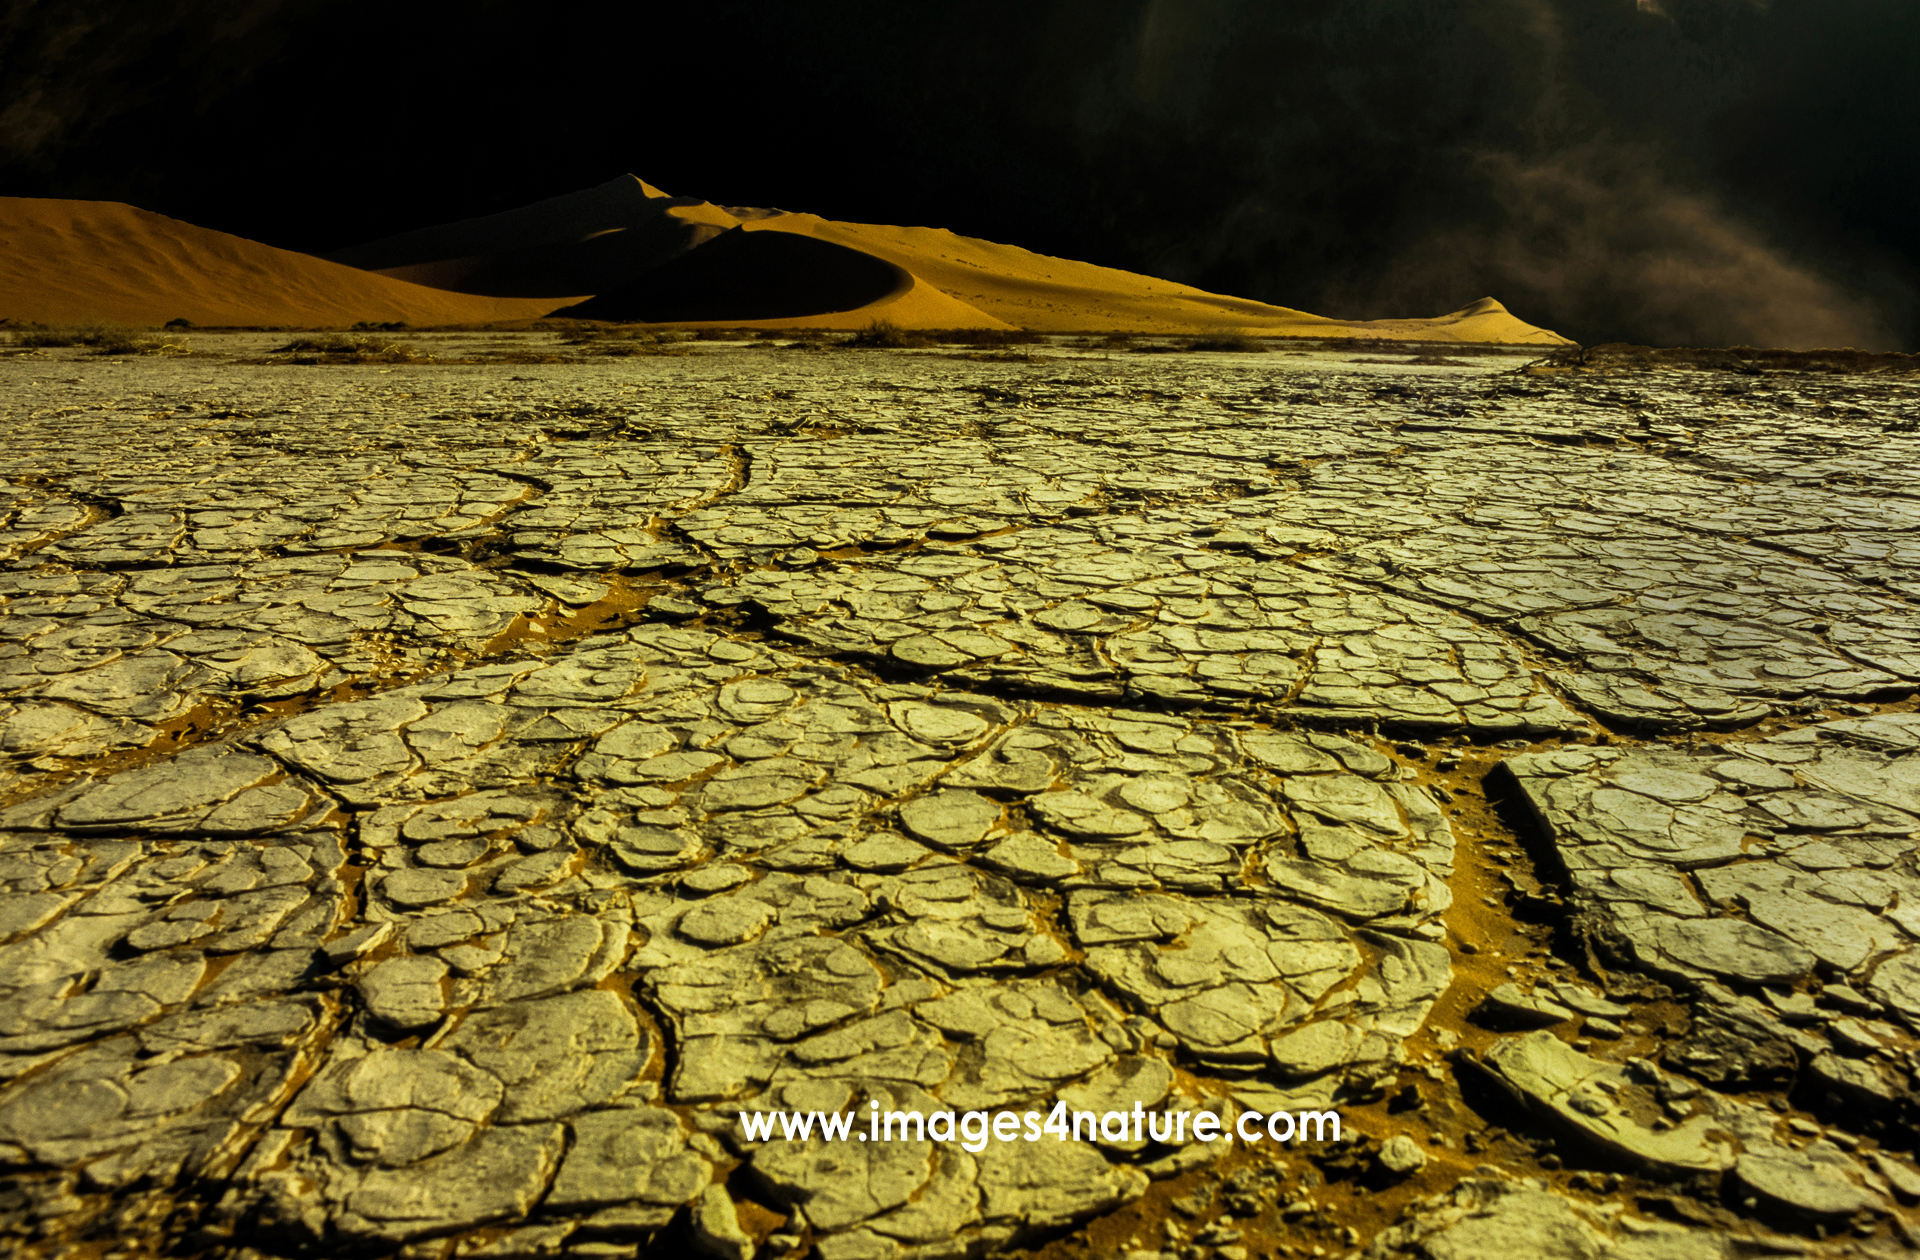 Dry soil pattern with Sossusvlei sand dunes against night sky